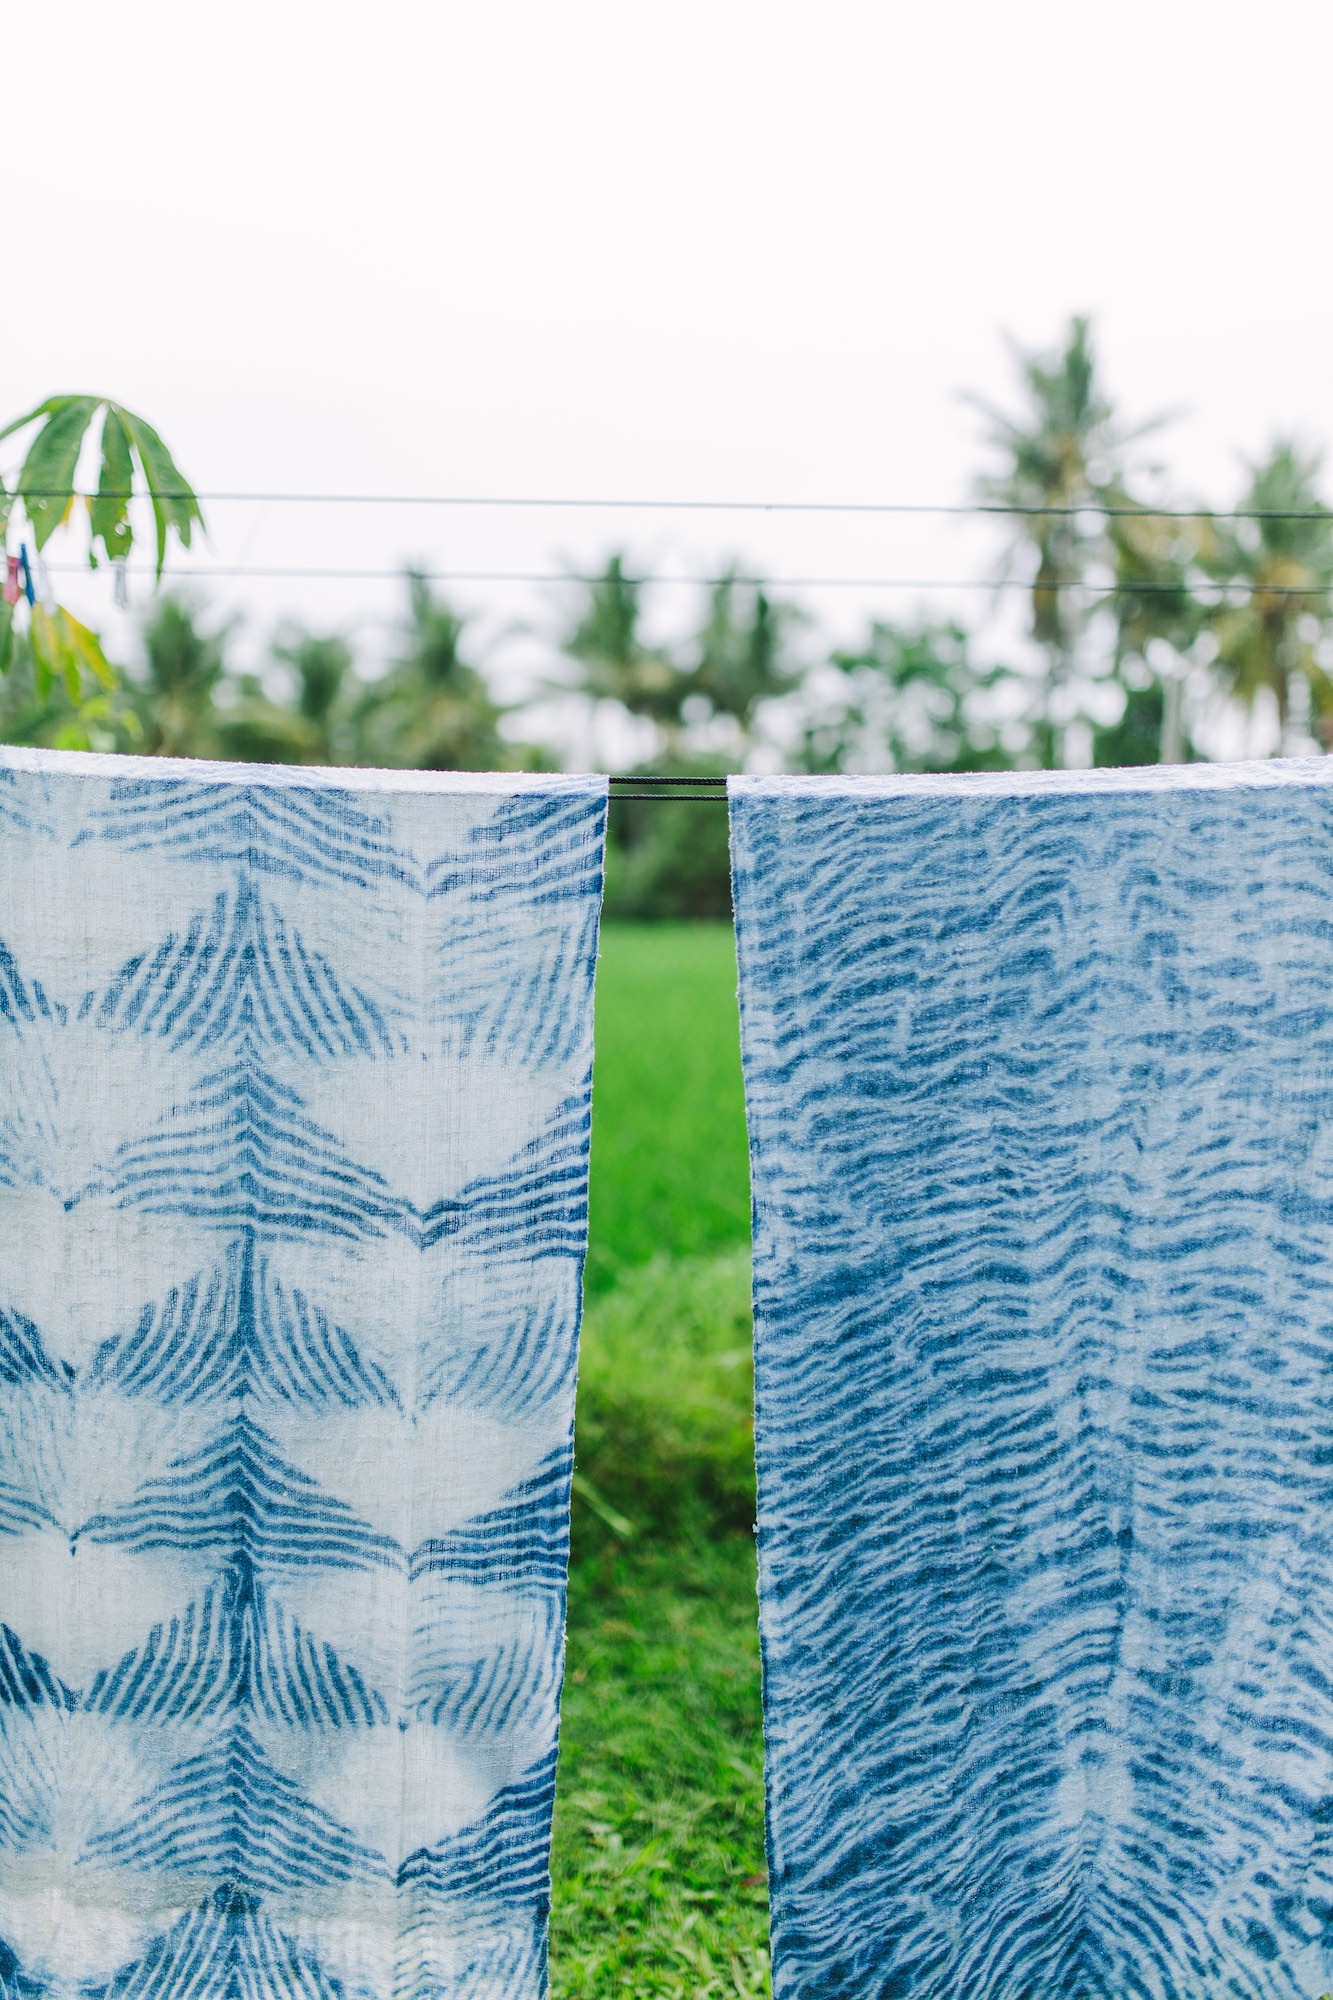 Indigo Dyeing in Bali